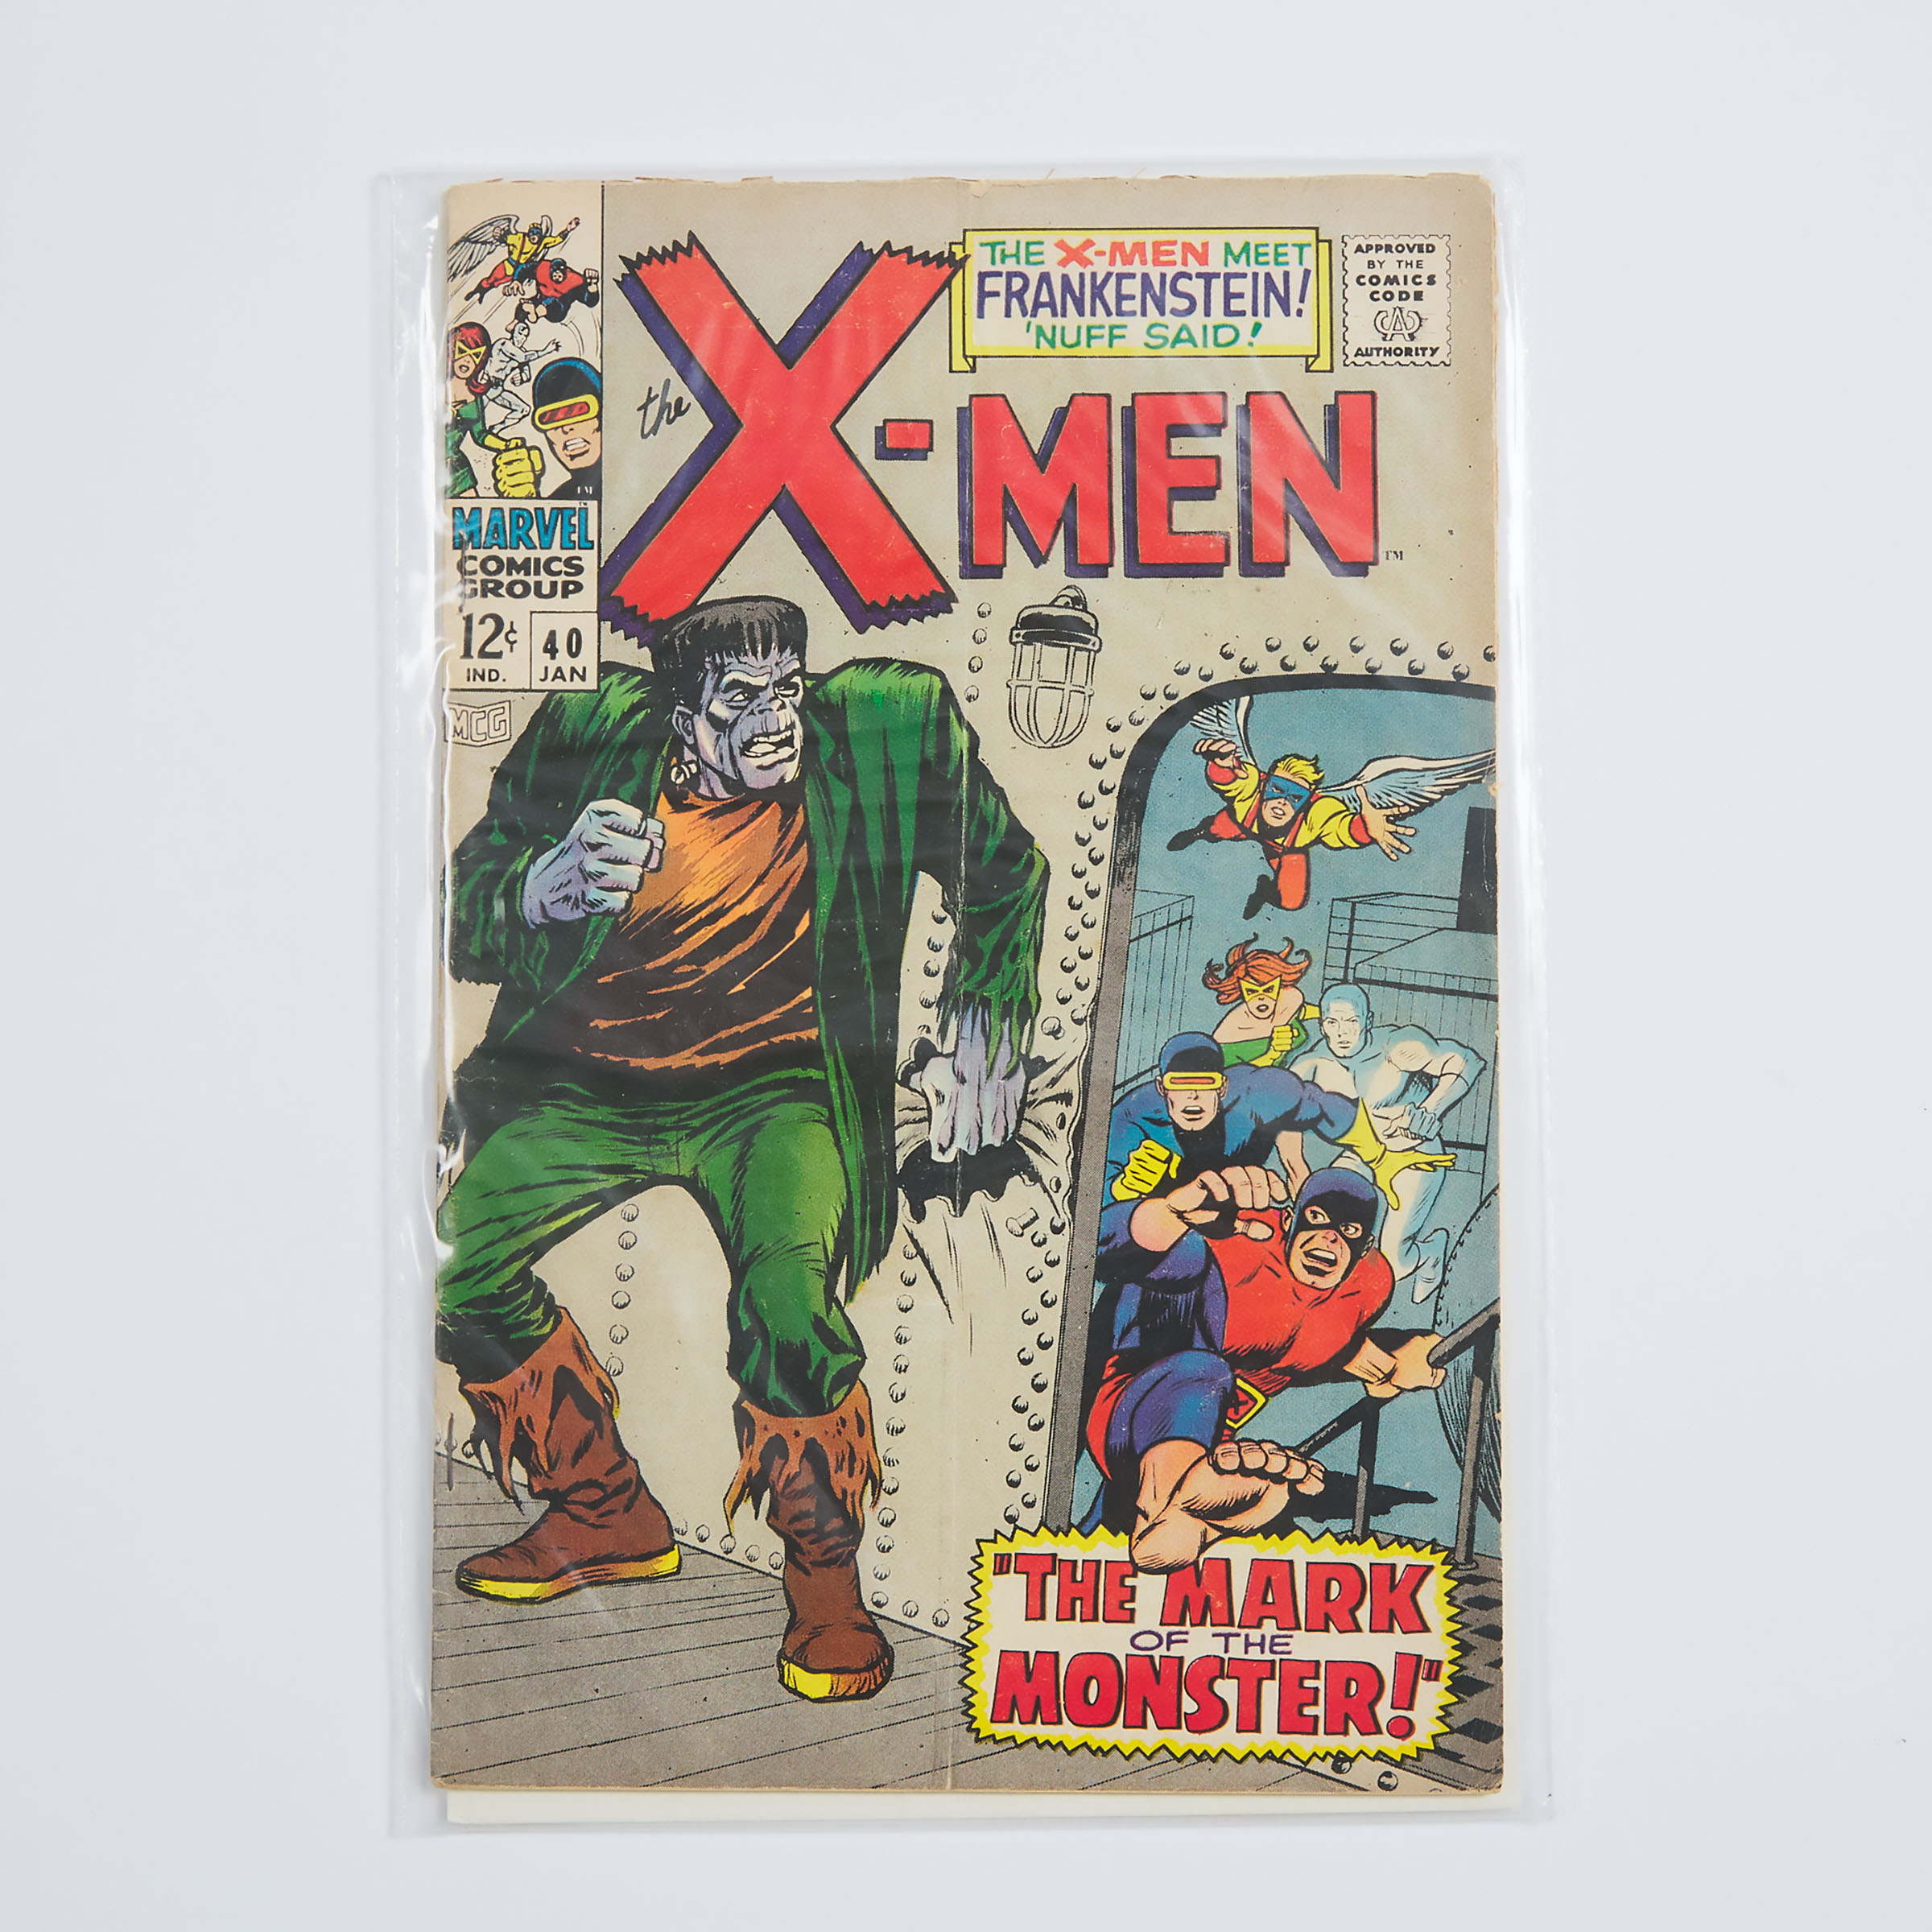 Marvel Comics Group X-Men #40, Jan. 10, 1968